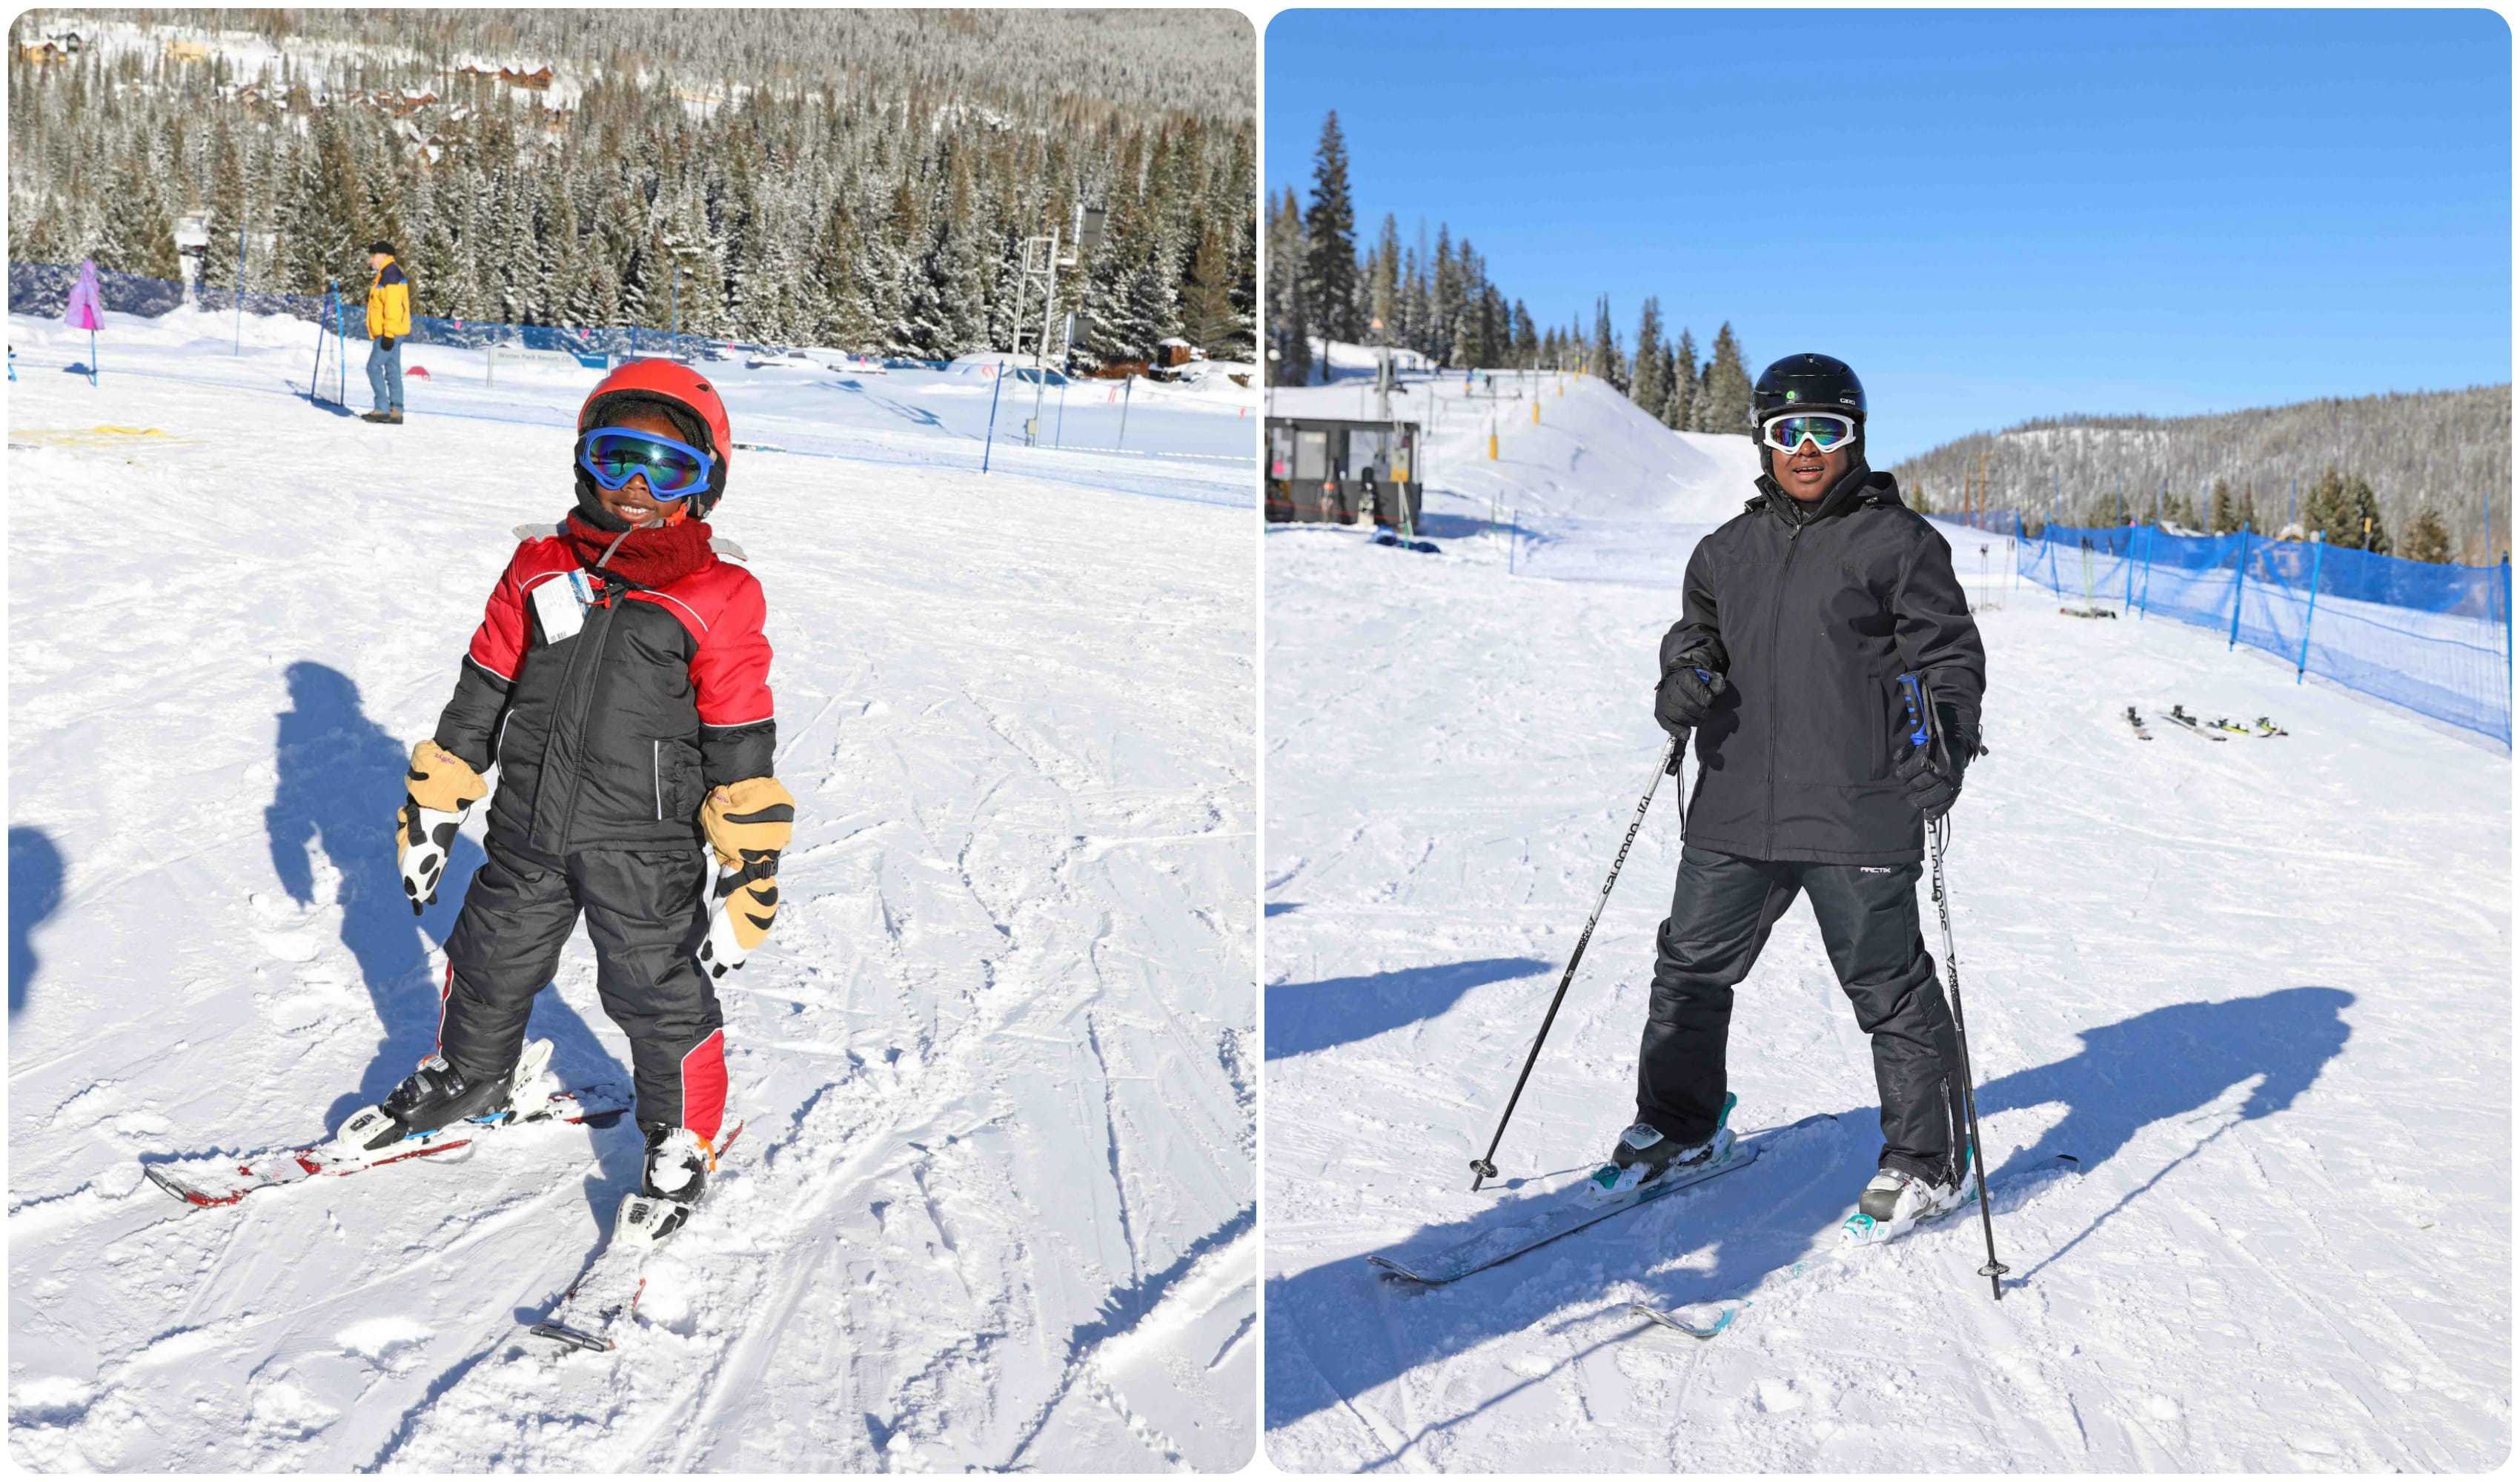 Black Family Travel ski school 2